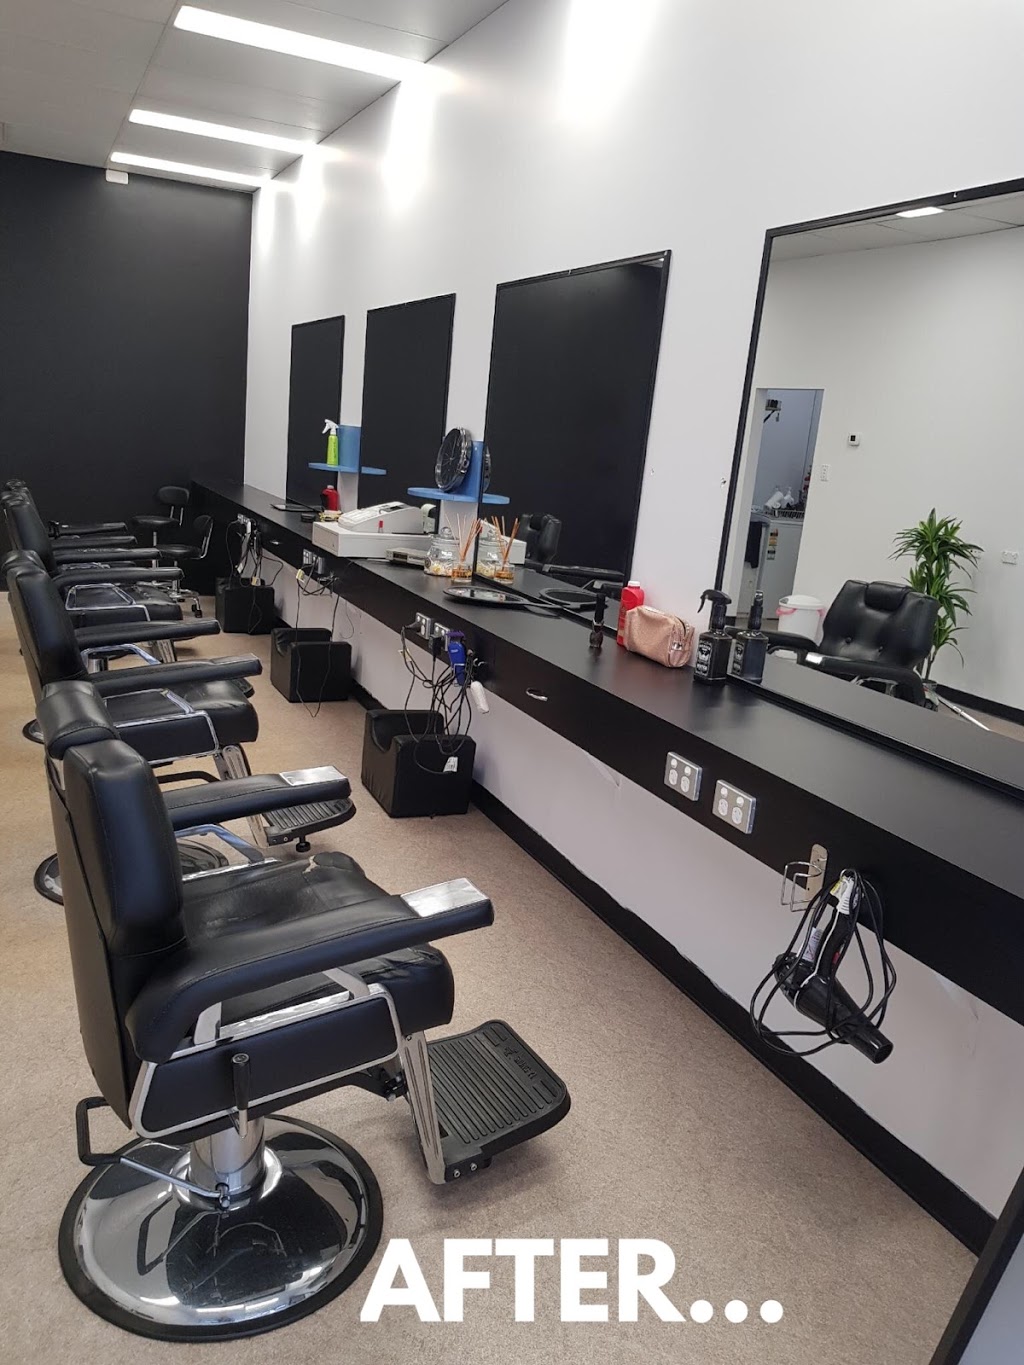 Bea My Barber | hair care | Shop 13 / 148 Bamford Lane, Parkside Shopping Centre, Kirwan QLD 4817, Australia